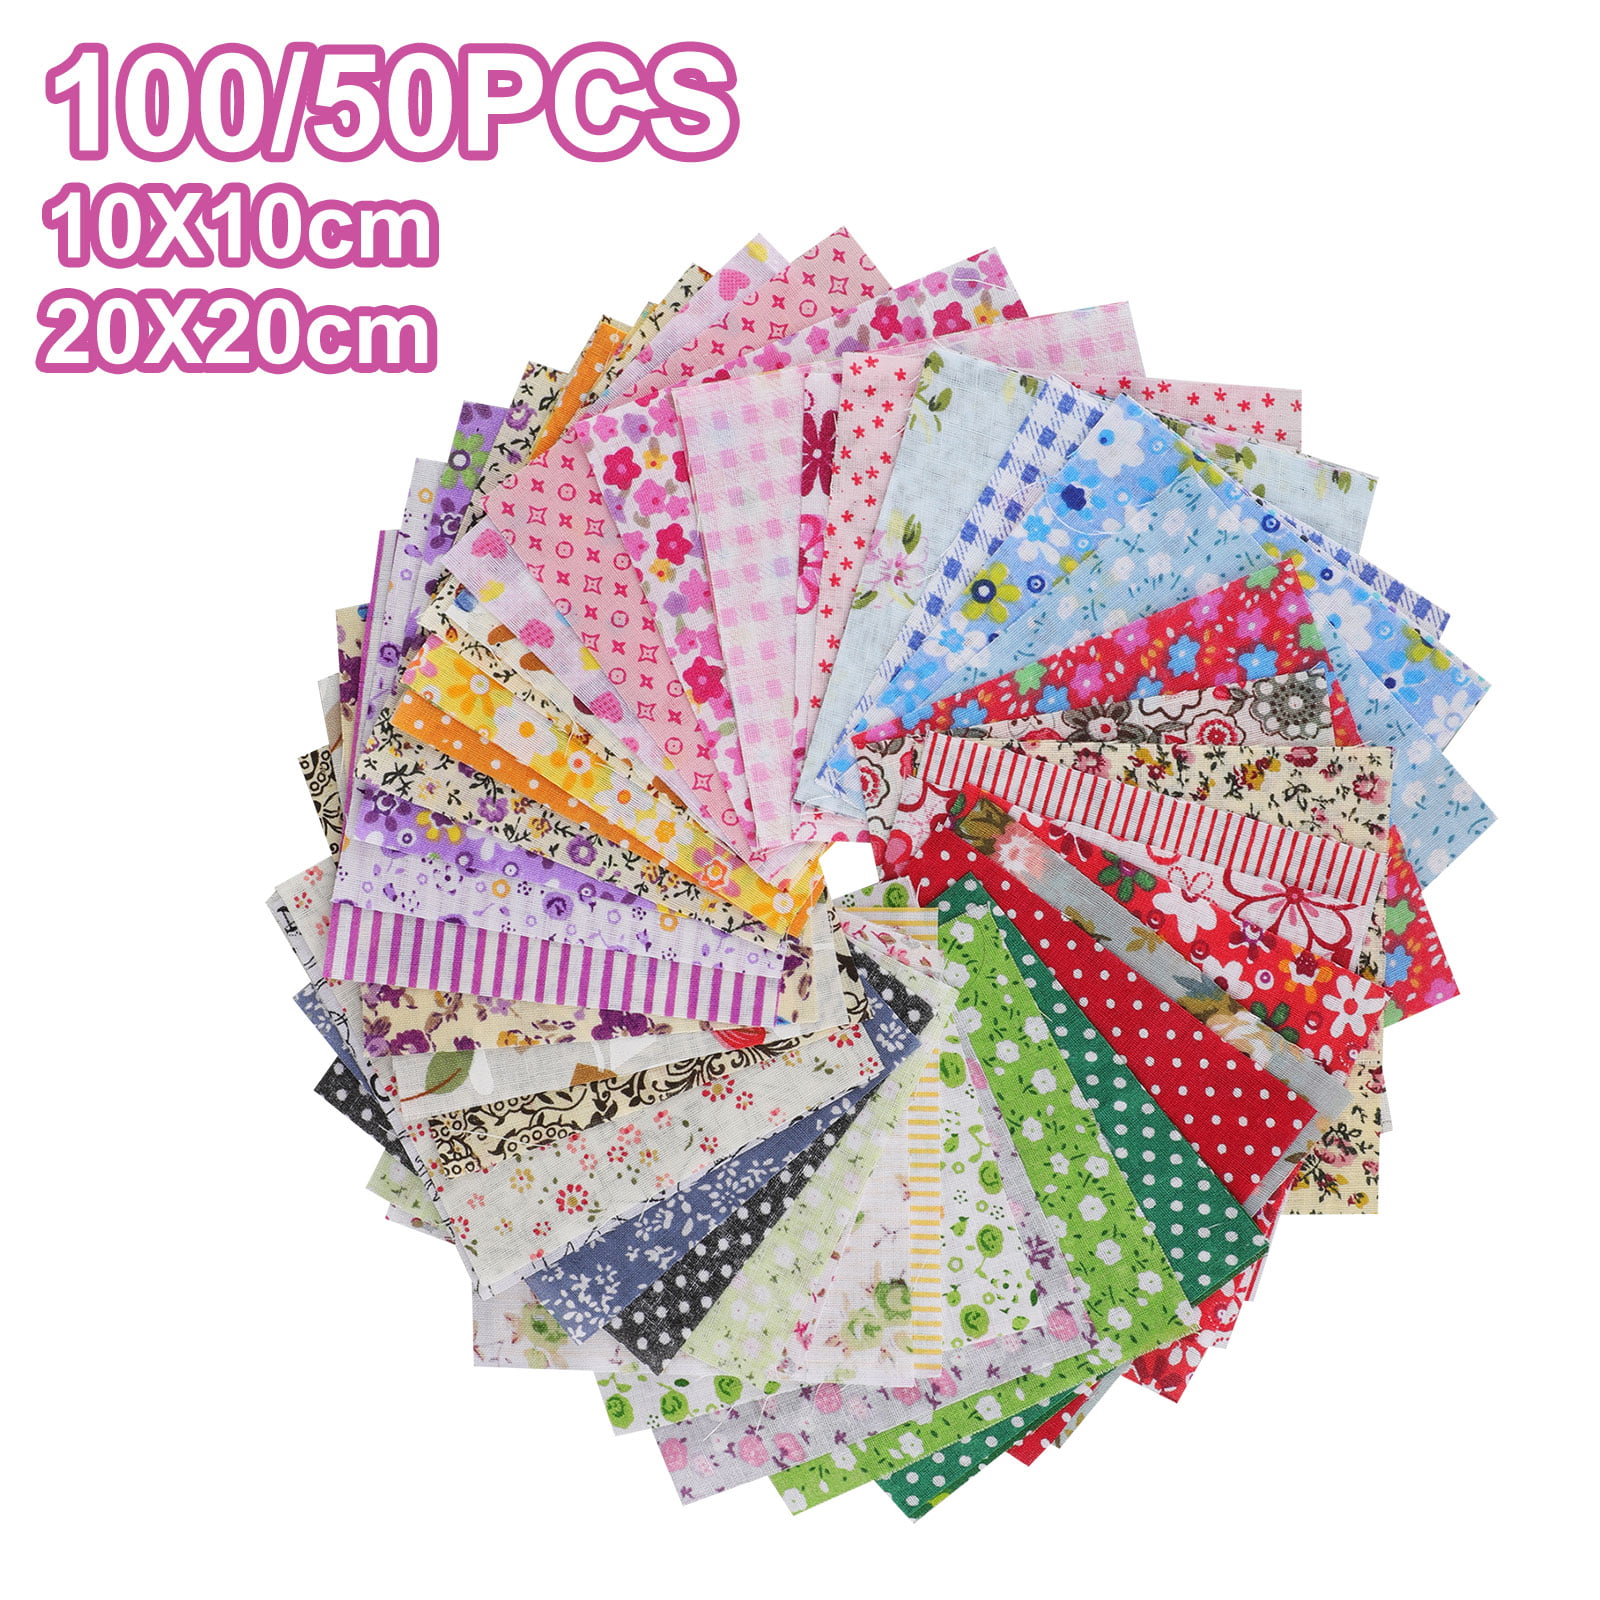 50 Colors 10 x 10 cm 50 Pieces Multi-colors Fabric Patchwork Cotton Mixed Squares Bundle Sewing Quilting Craft 